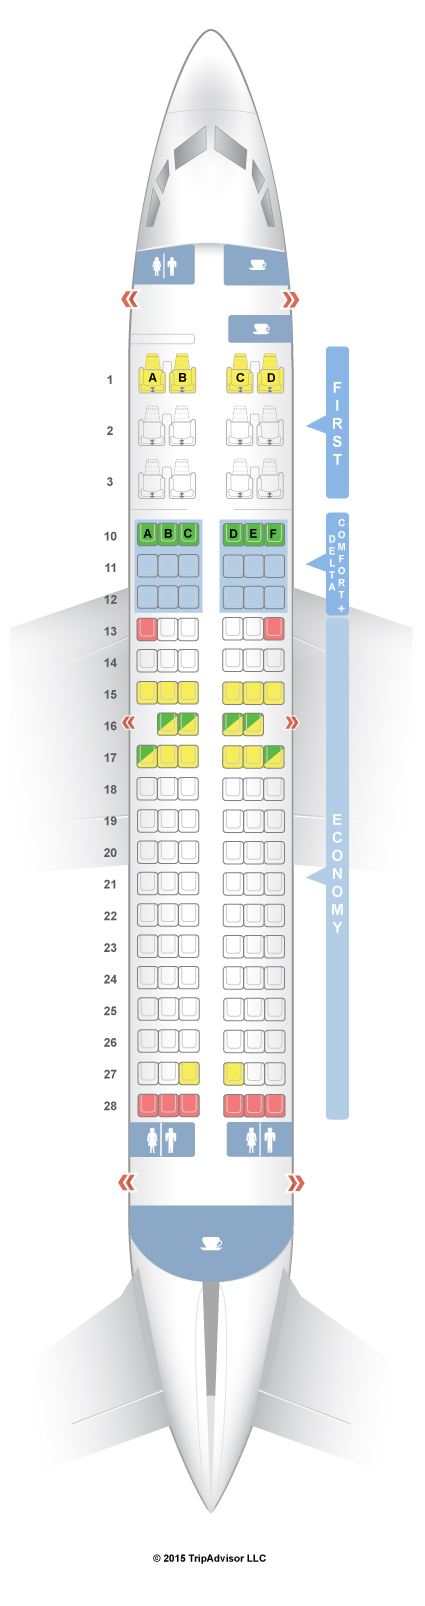 Delta Air Seating Chart